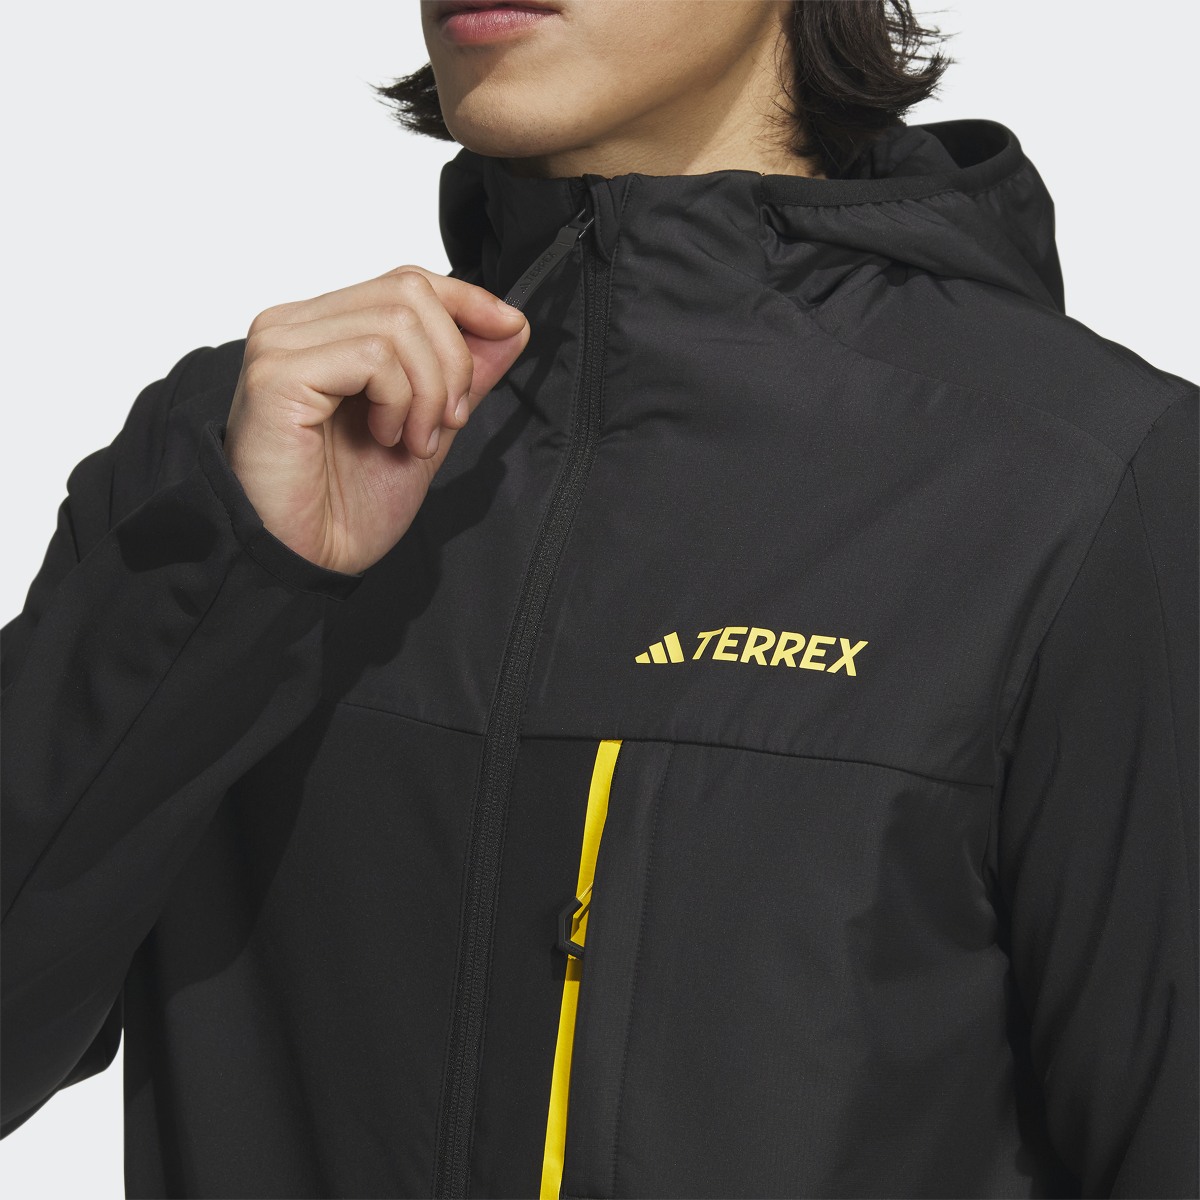 Adidas National Geographic Soft Shell Jacket. 8